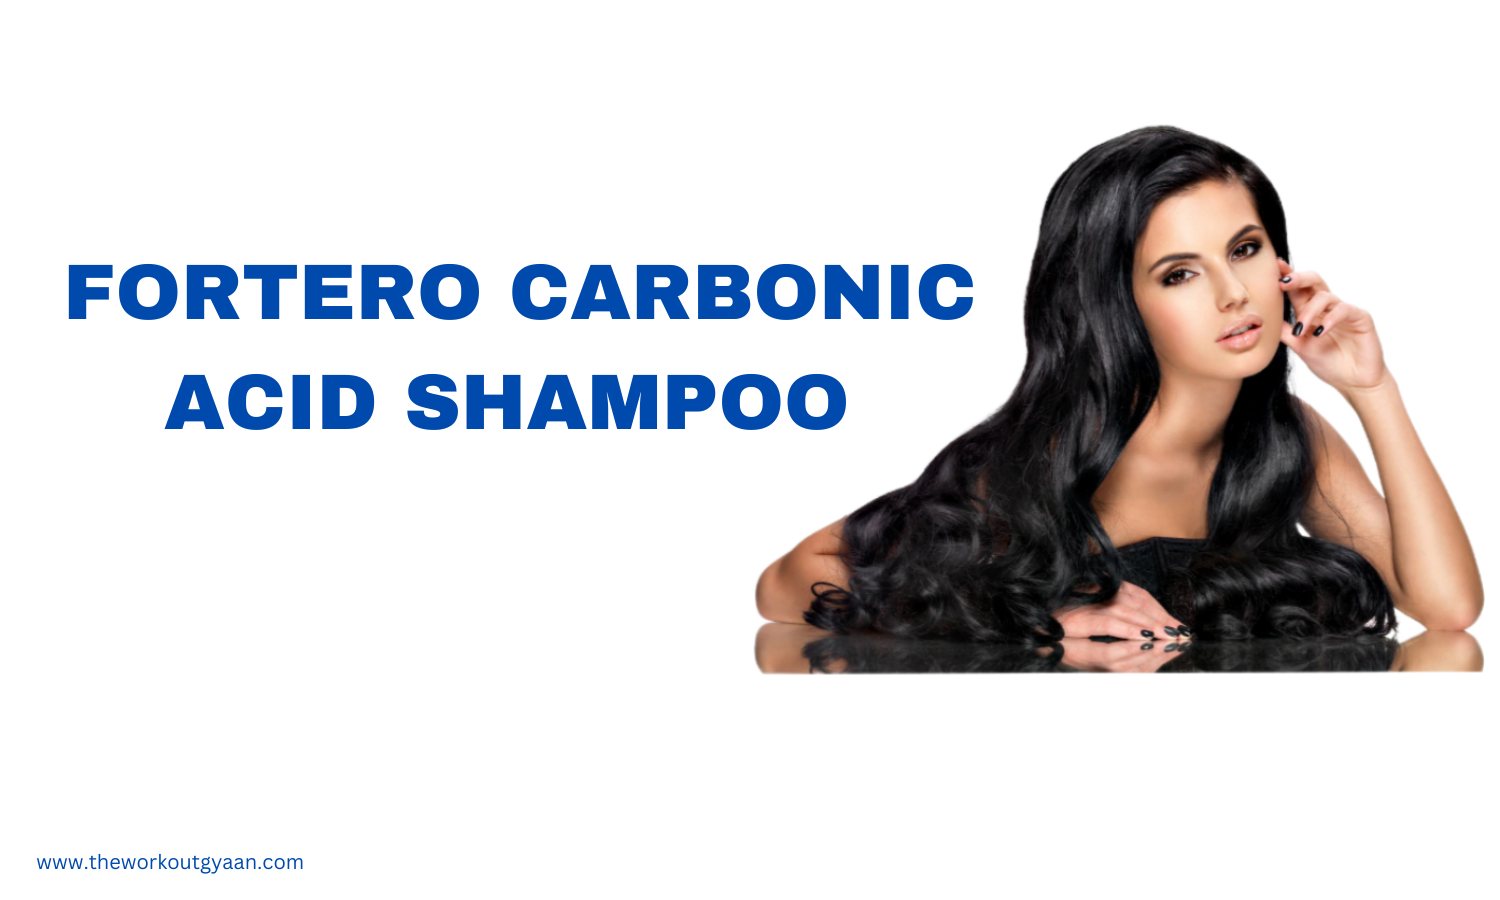 fortero carbonic acid shampoo